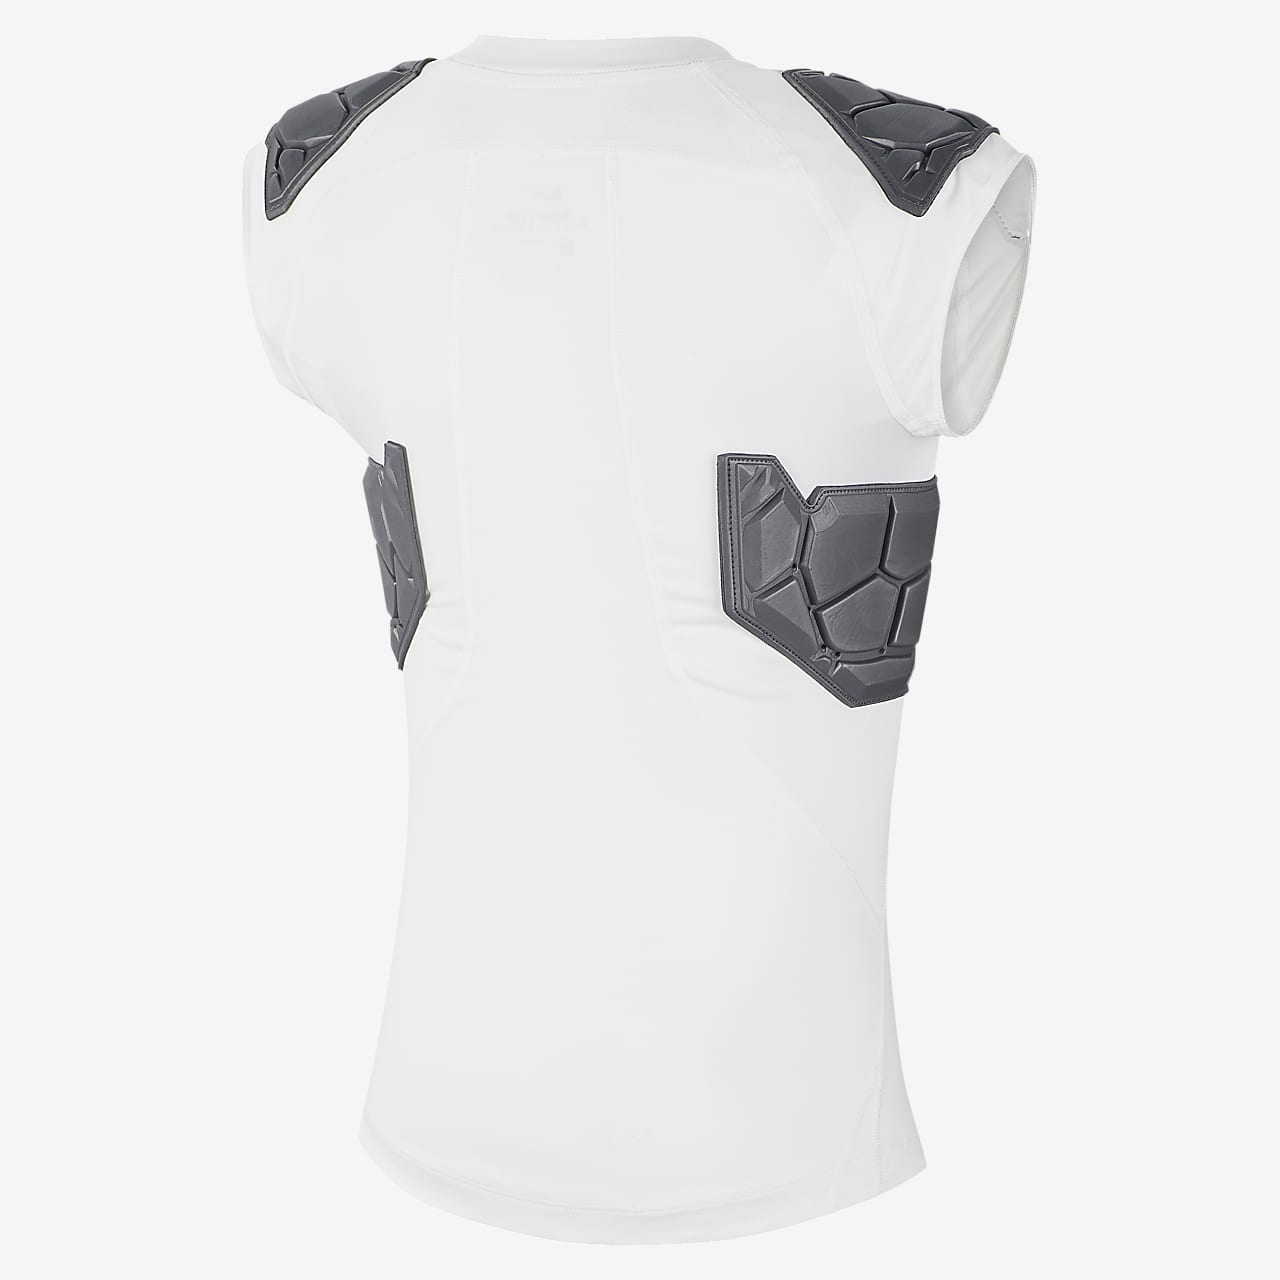 Nike, Shirts, Nike Pro Sleeveless Compression Top